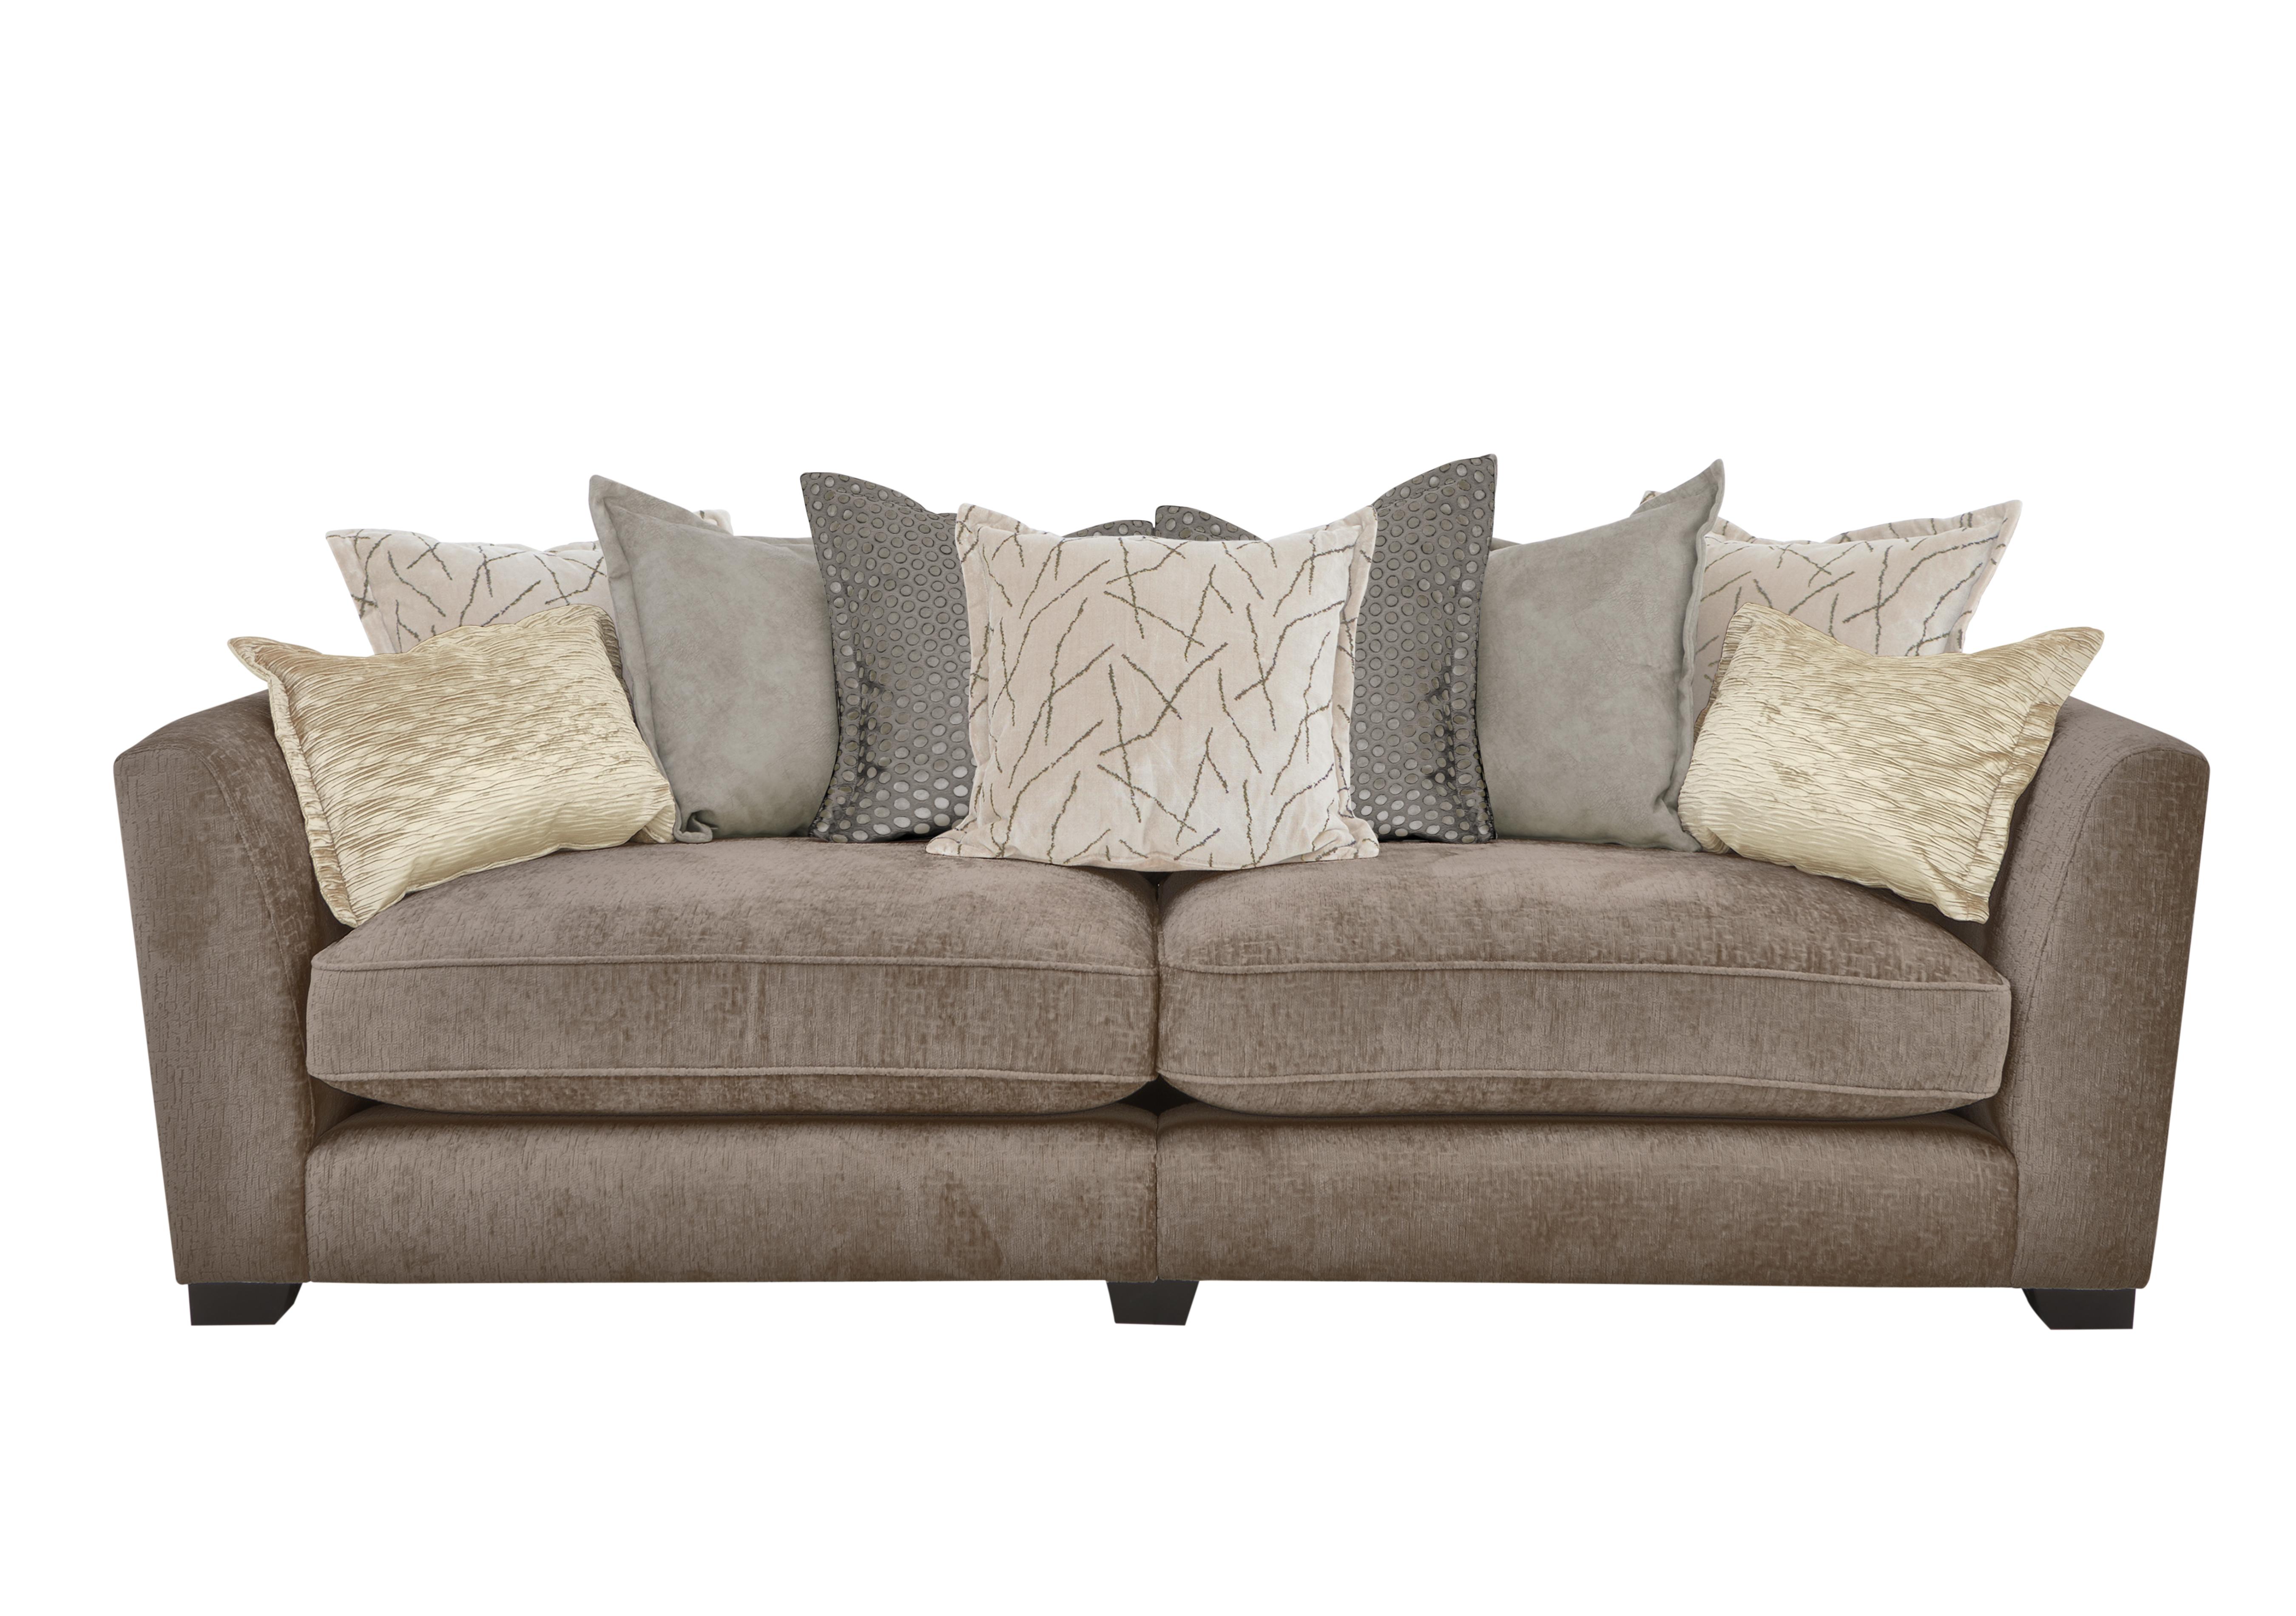 Boutique Lavish Fabric 4 Seater Split Scatter Back Sofa in Alexandra Coco on Furniture Village